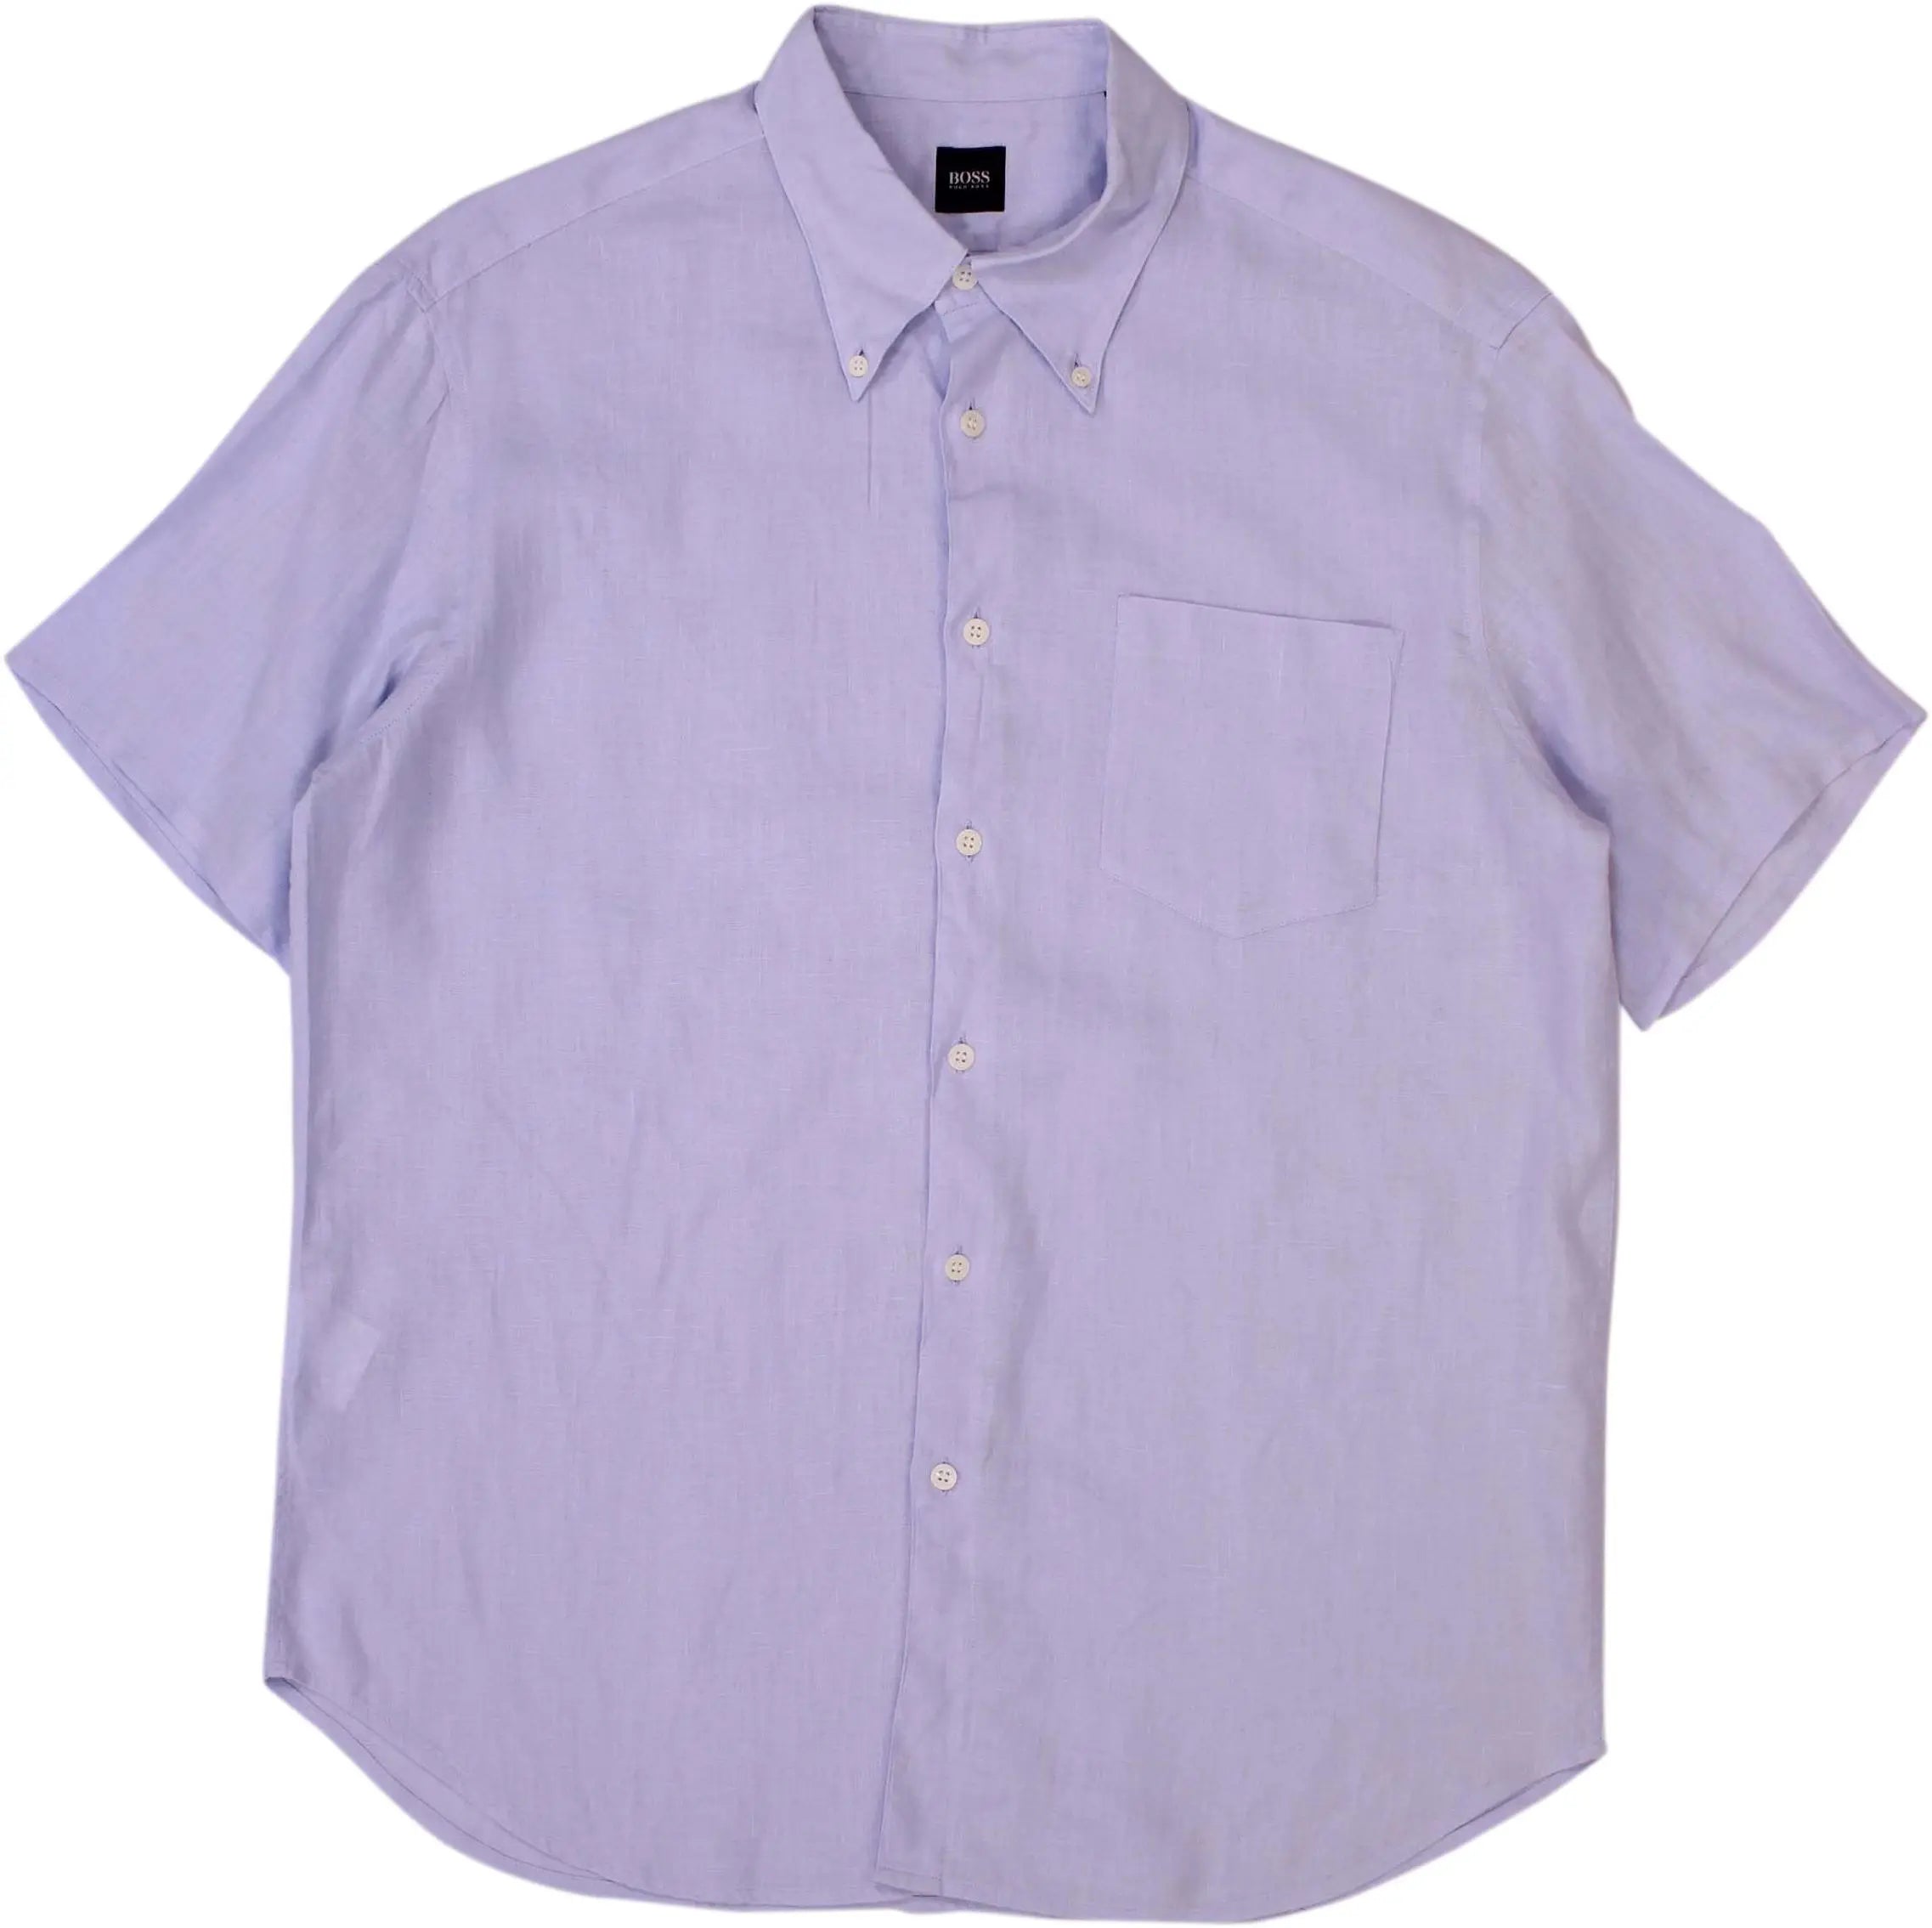 Hugo Boss - Linen Short Sleeve Shirt by Hugo Boss- ThriftTale.com - Vintage and second handclothing